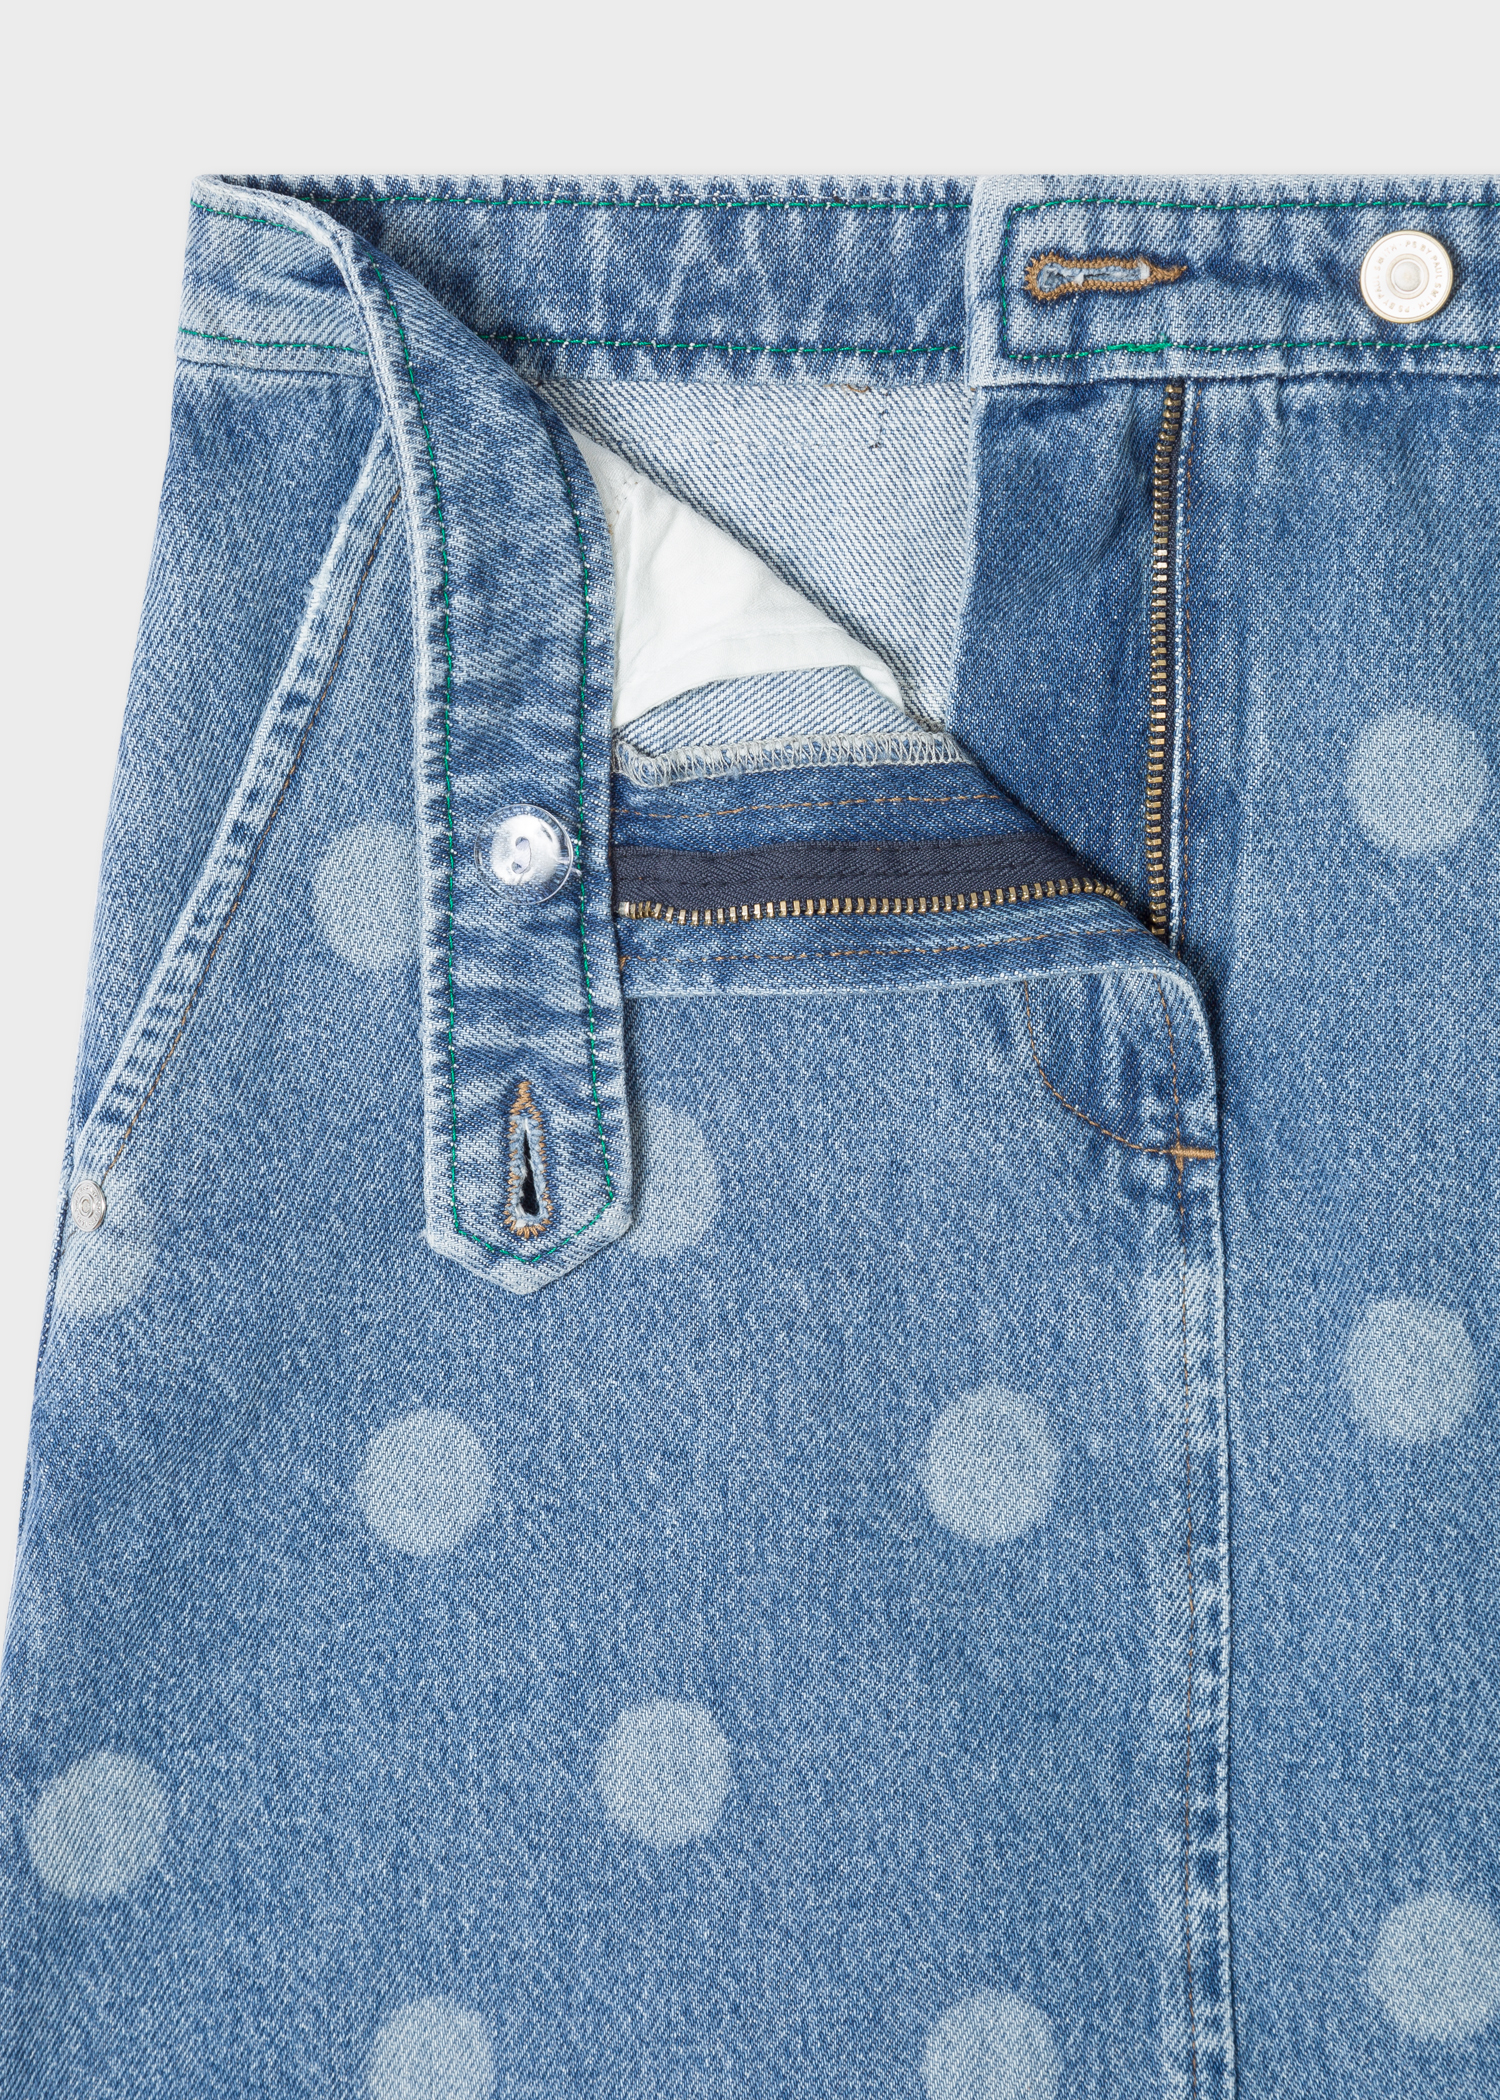 Detailed View - Women's Light Wash Denim Polka Dots Mini Skirt Paul Smith